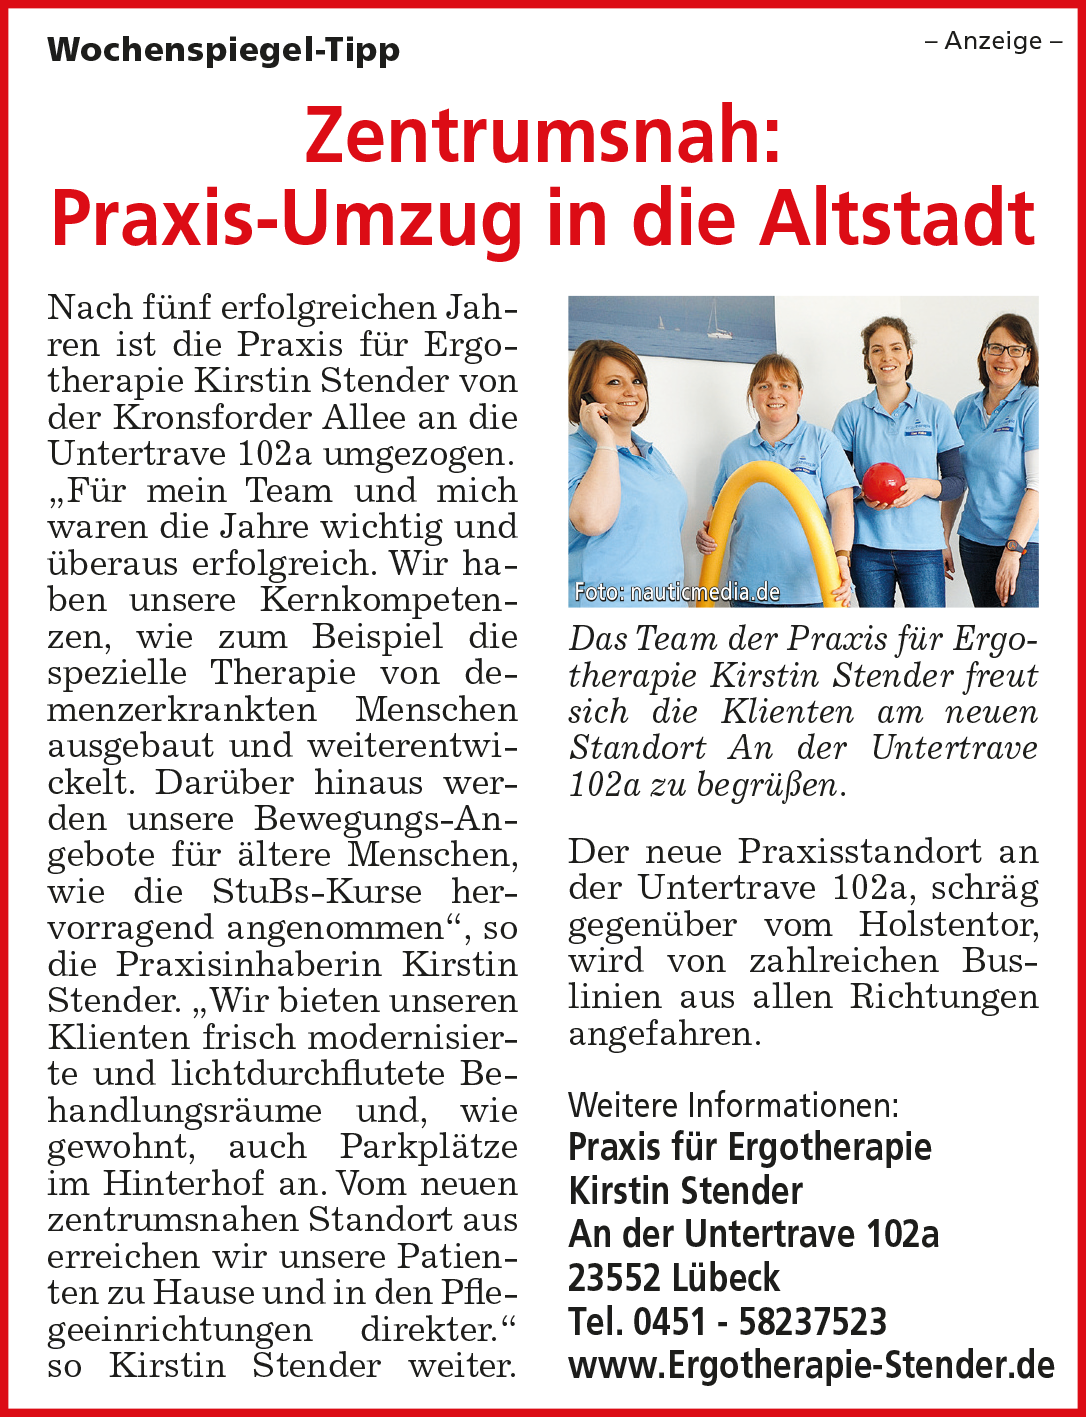 Ergotherapie Kirstin Stender - Zentrumsnah: Praxis-Umzug in die Altstadt